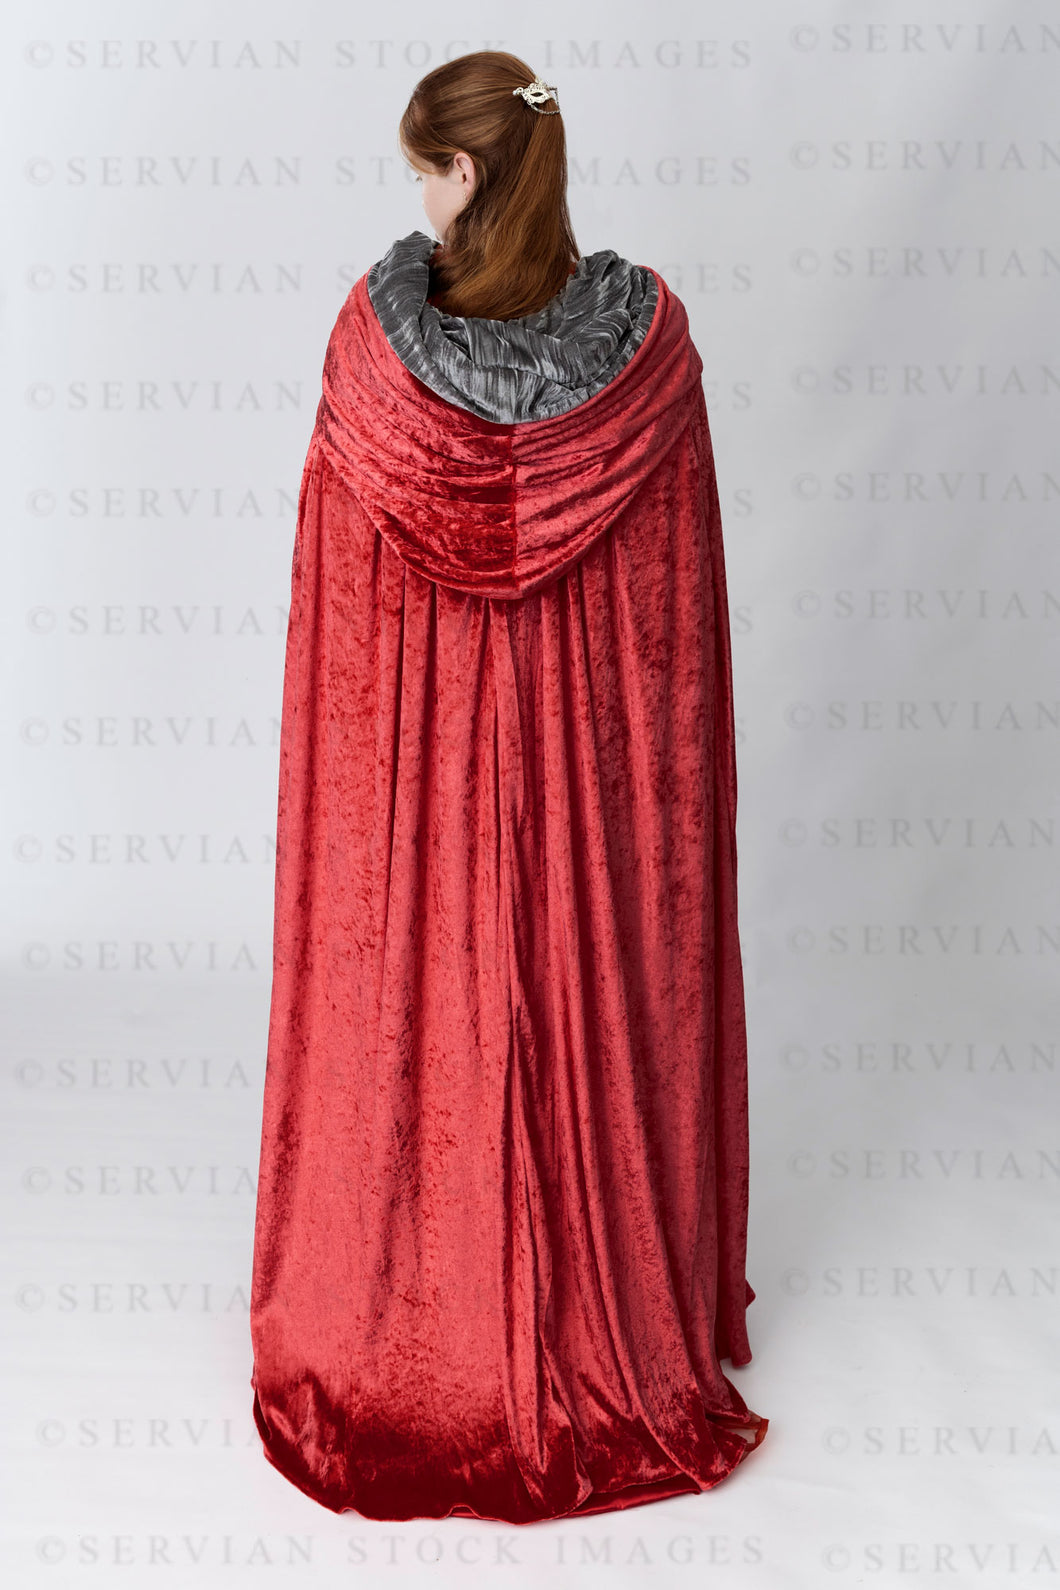 Medieval or High fantasy woman in a long red velvet cloak (Katherine5079)